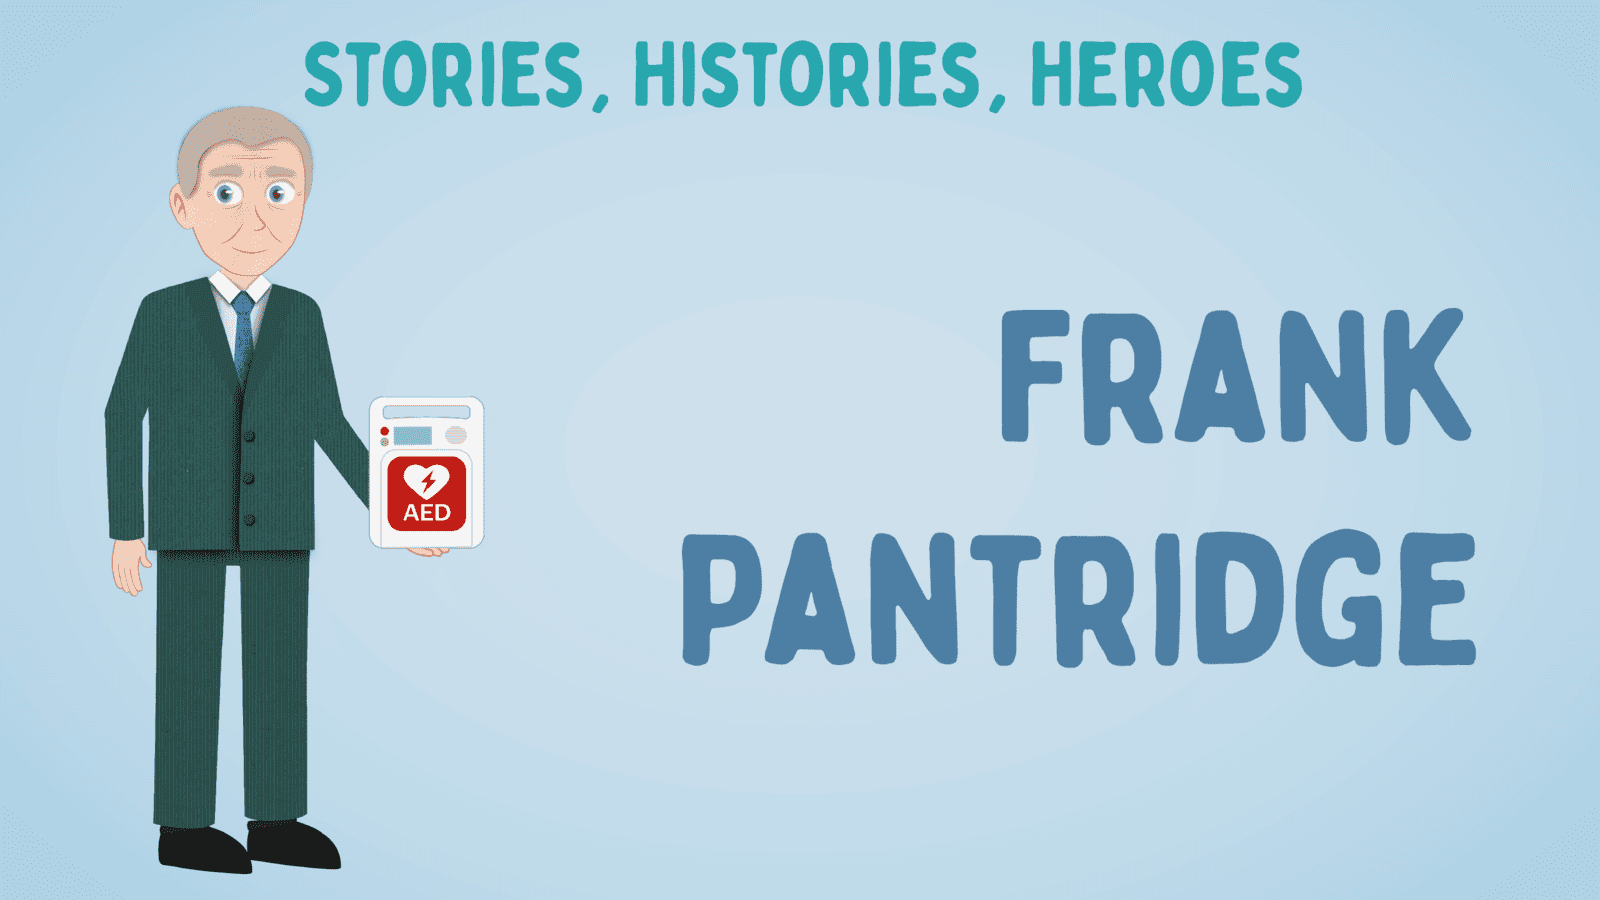 Ulster-Scots Inventor Frank Pantridge: Inventor of the Defibrillator